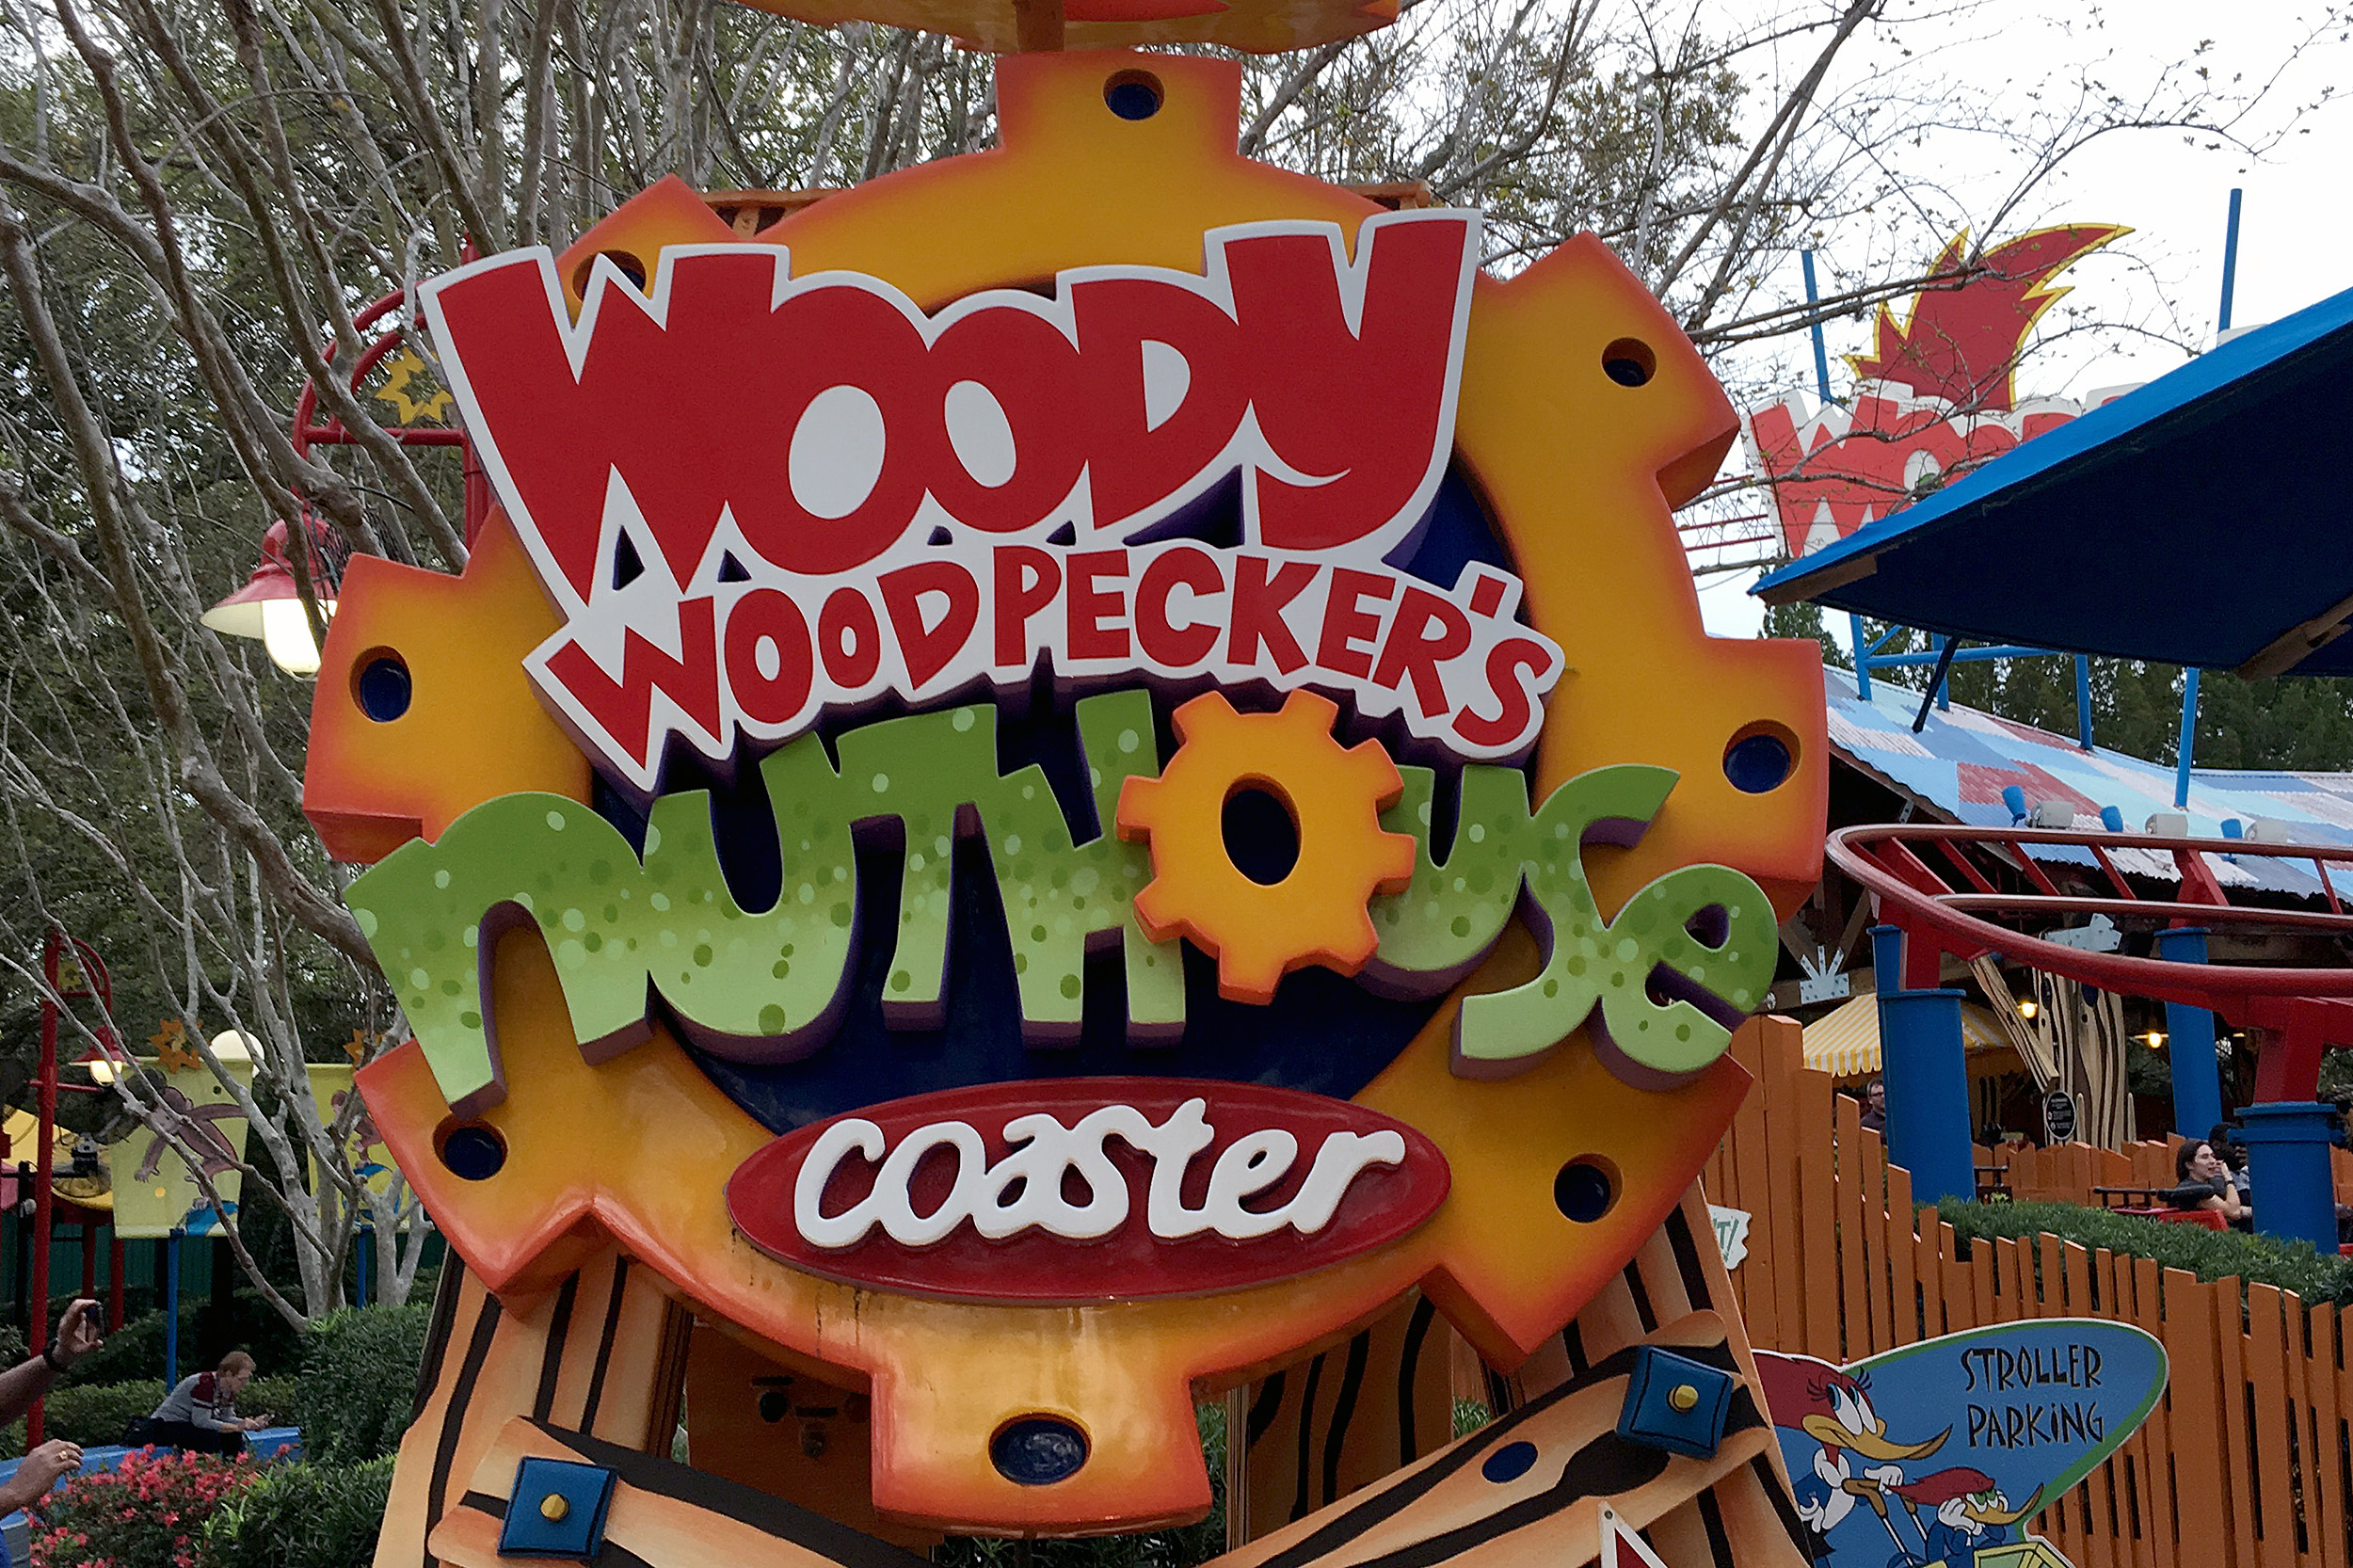 Woody Woodpeckers Coaster Universal Studios Florida Åkattraktioner